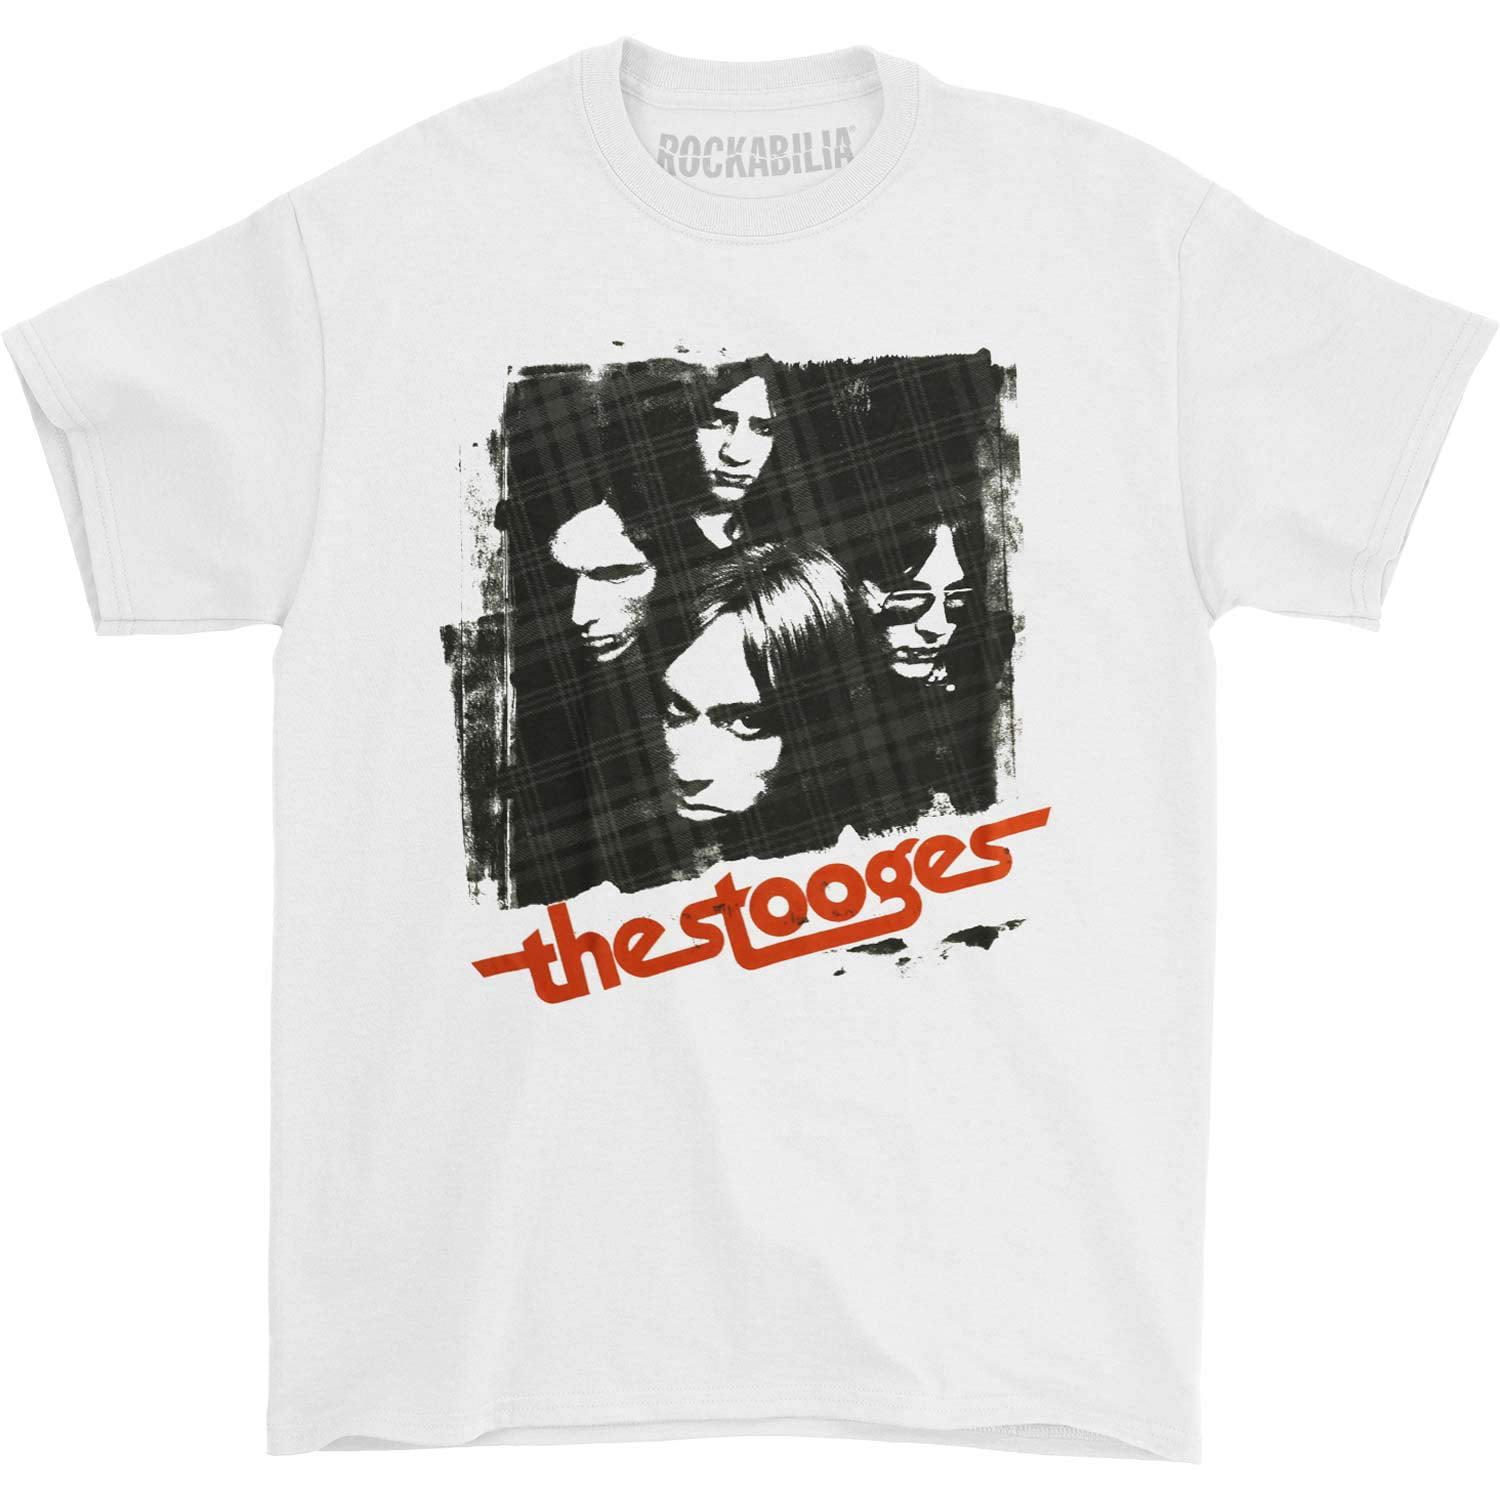 HIFI - Iggy Pop Men's Stooges Group T-Shirt White - Walmart.com ...